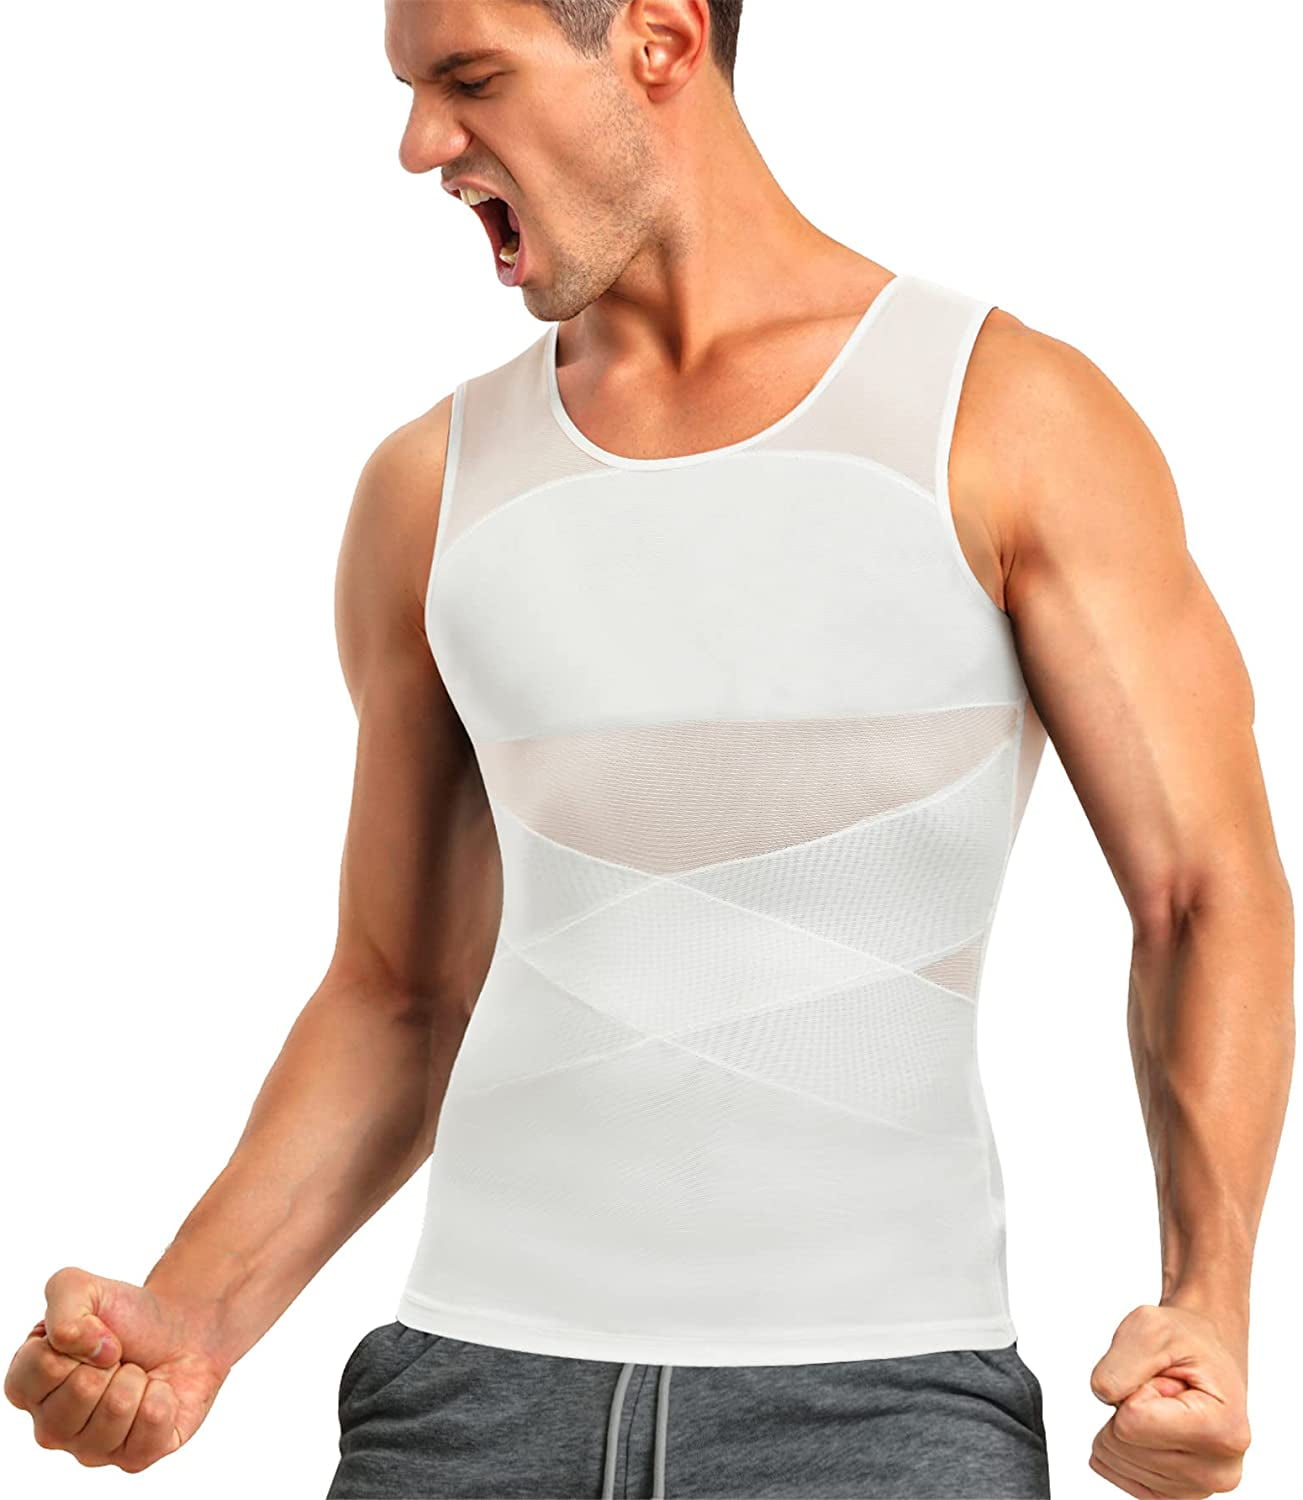 Gotoly Compression Shirt for Men Slimming Undershirt Body Shaper